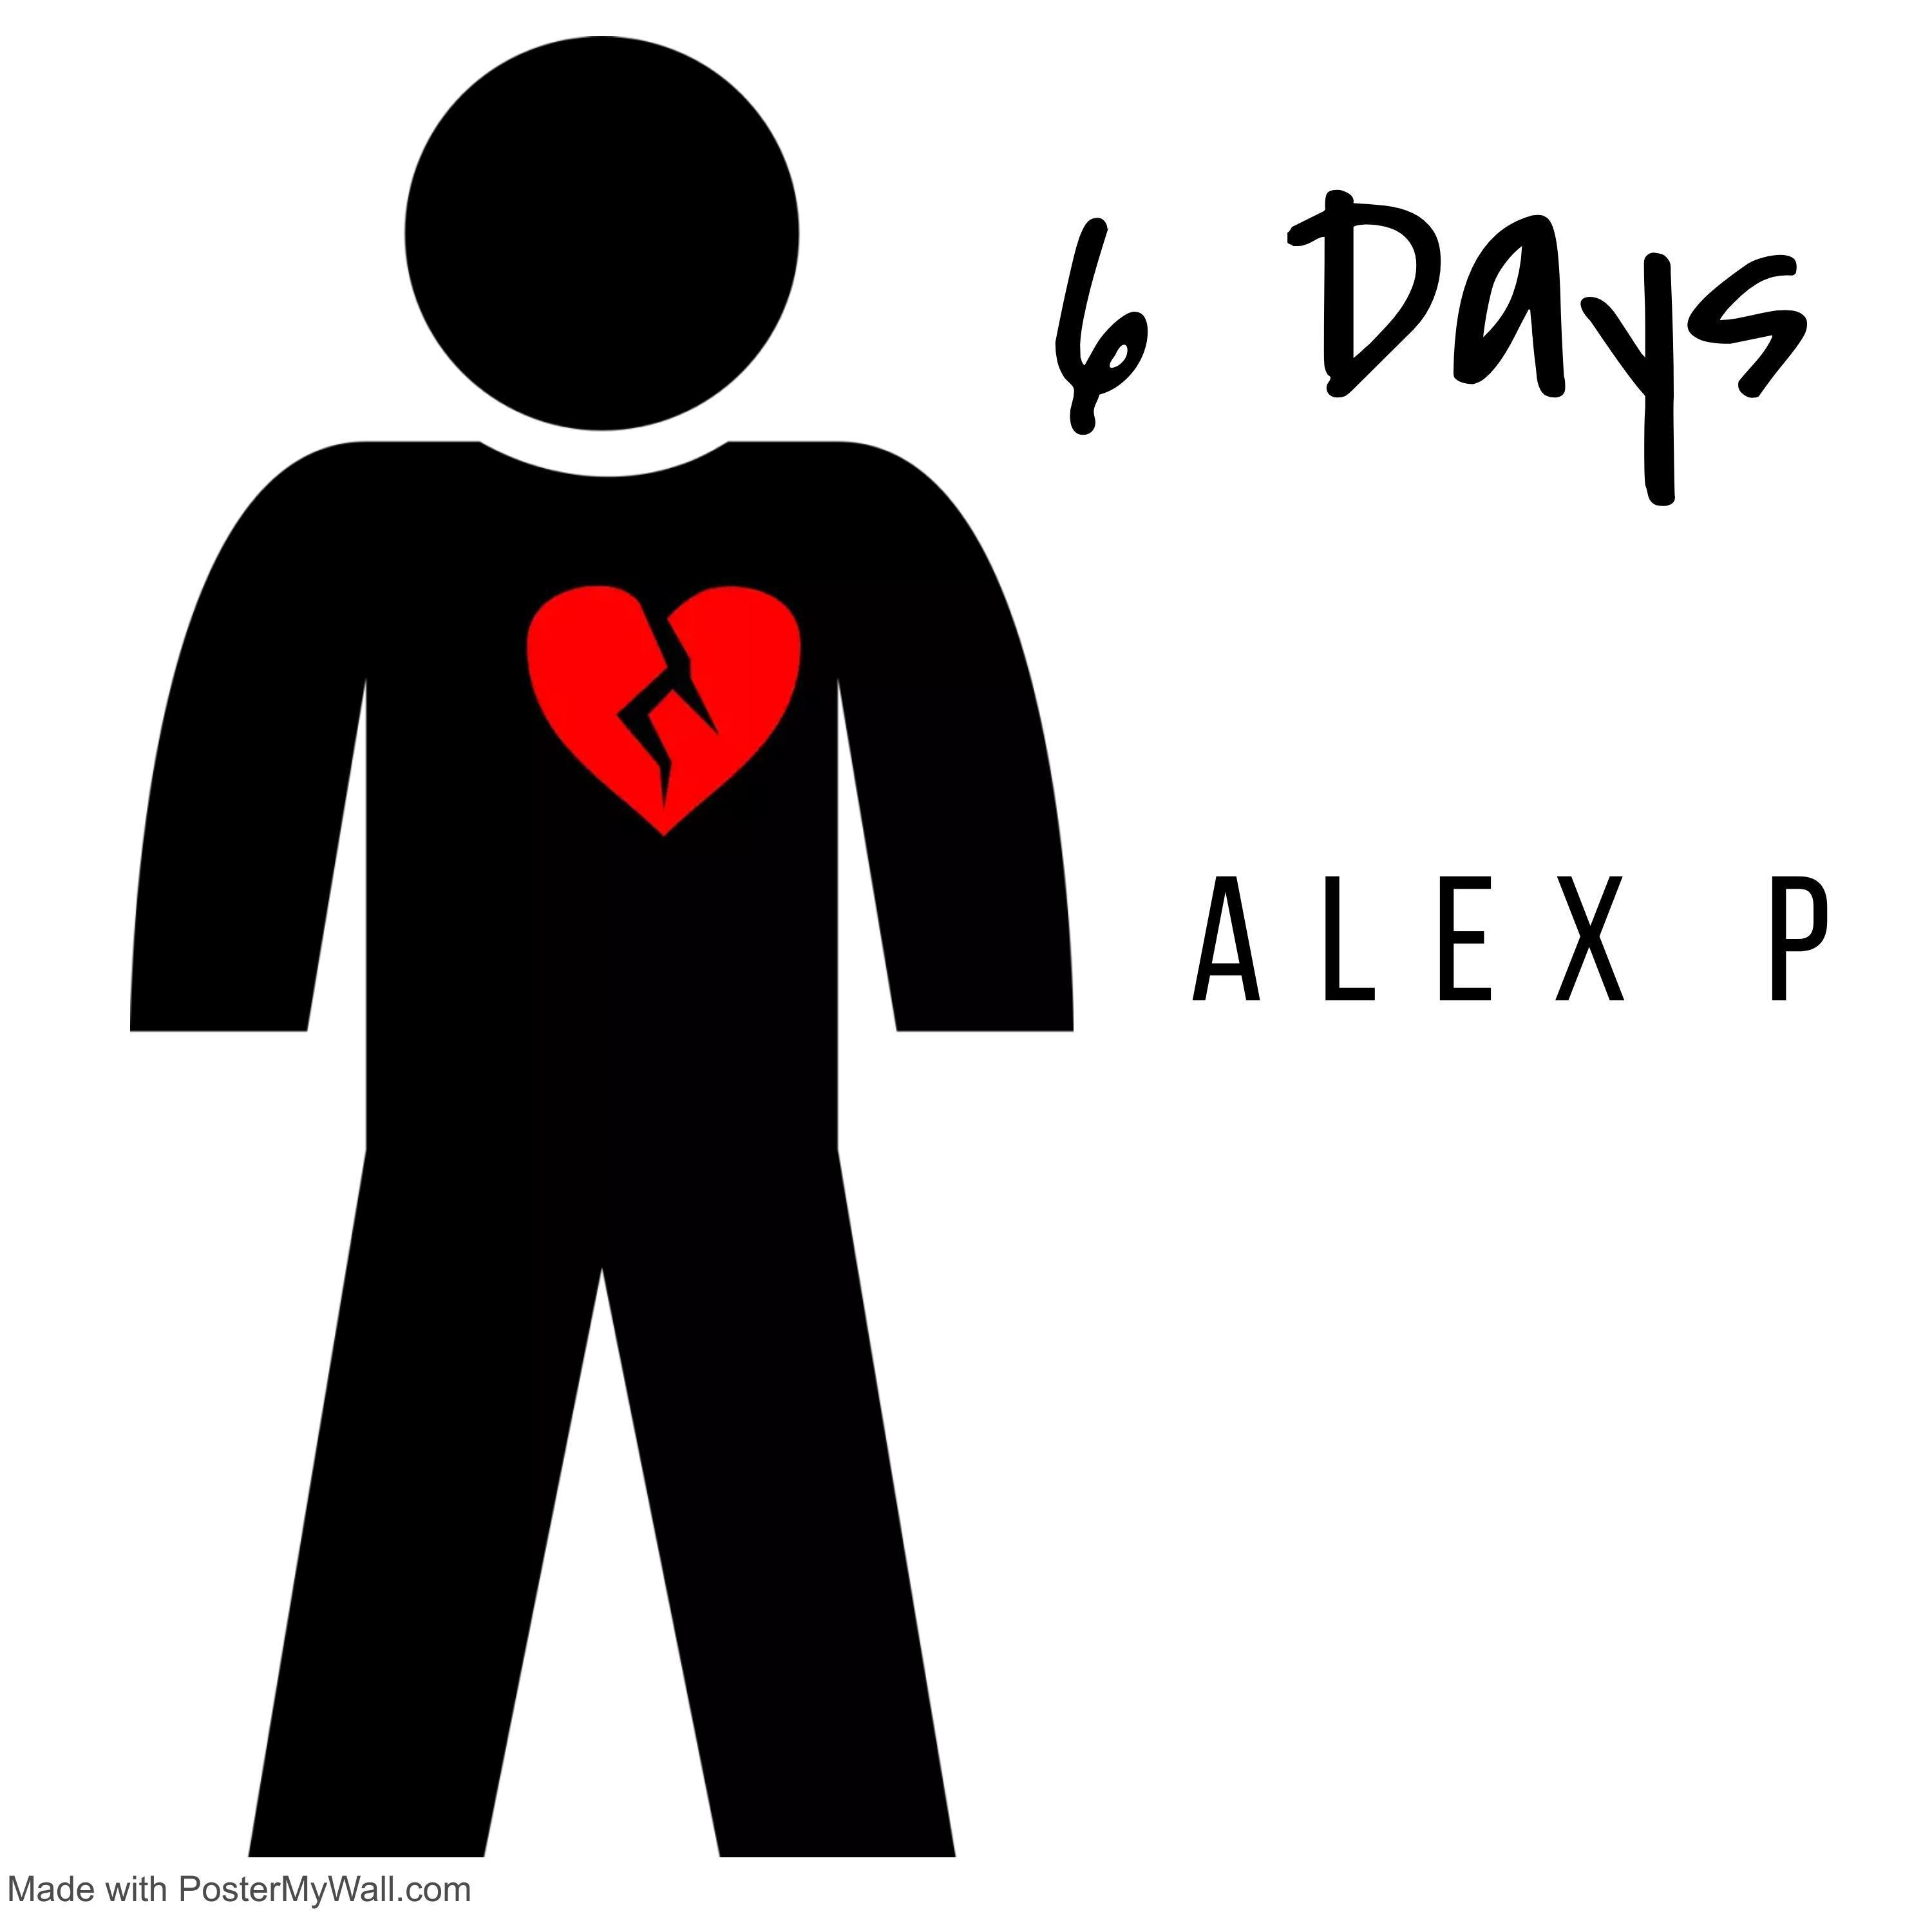 Alex P - 6 Days